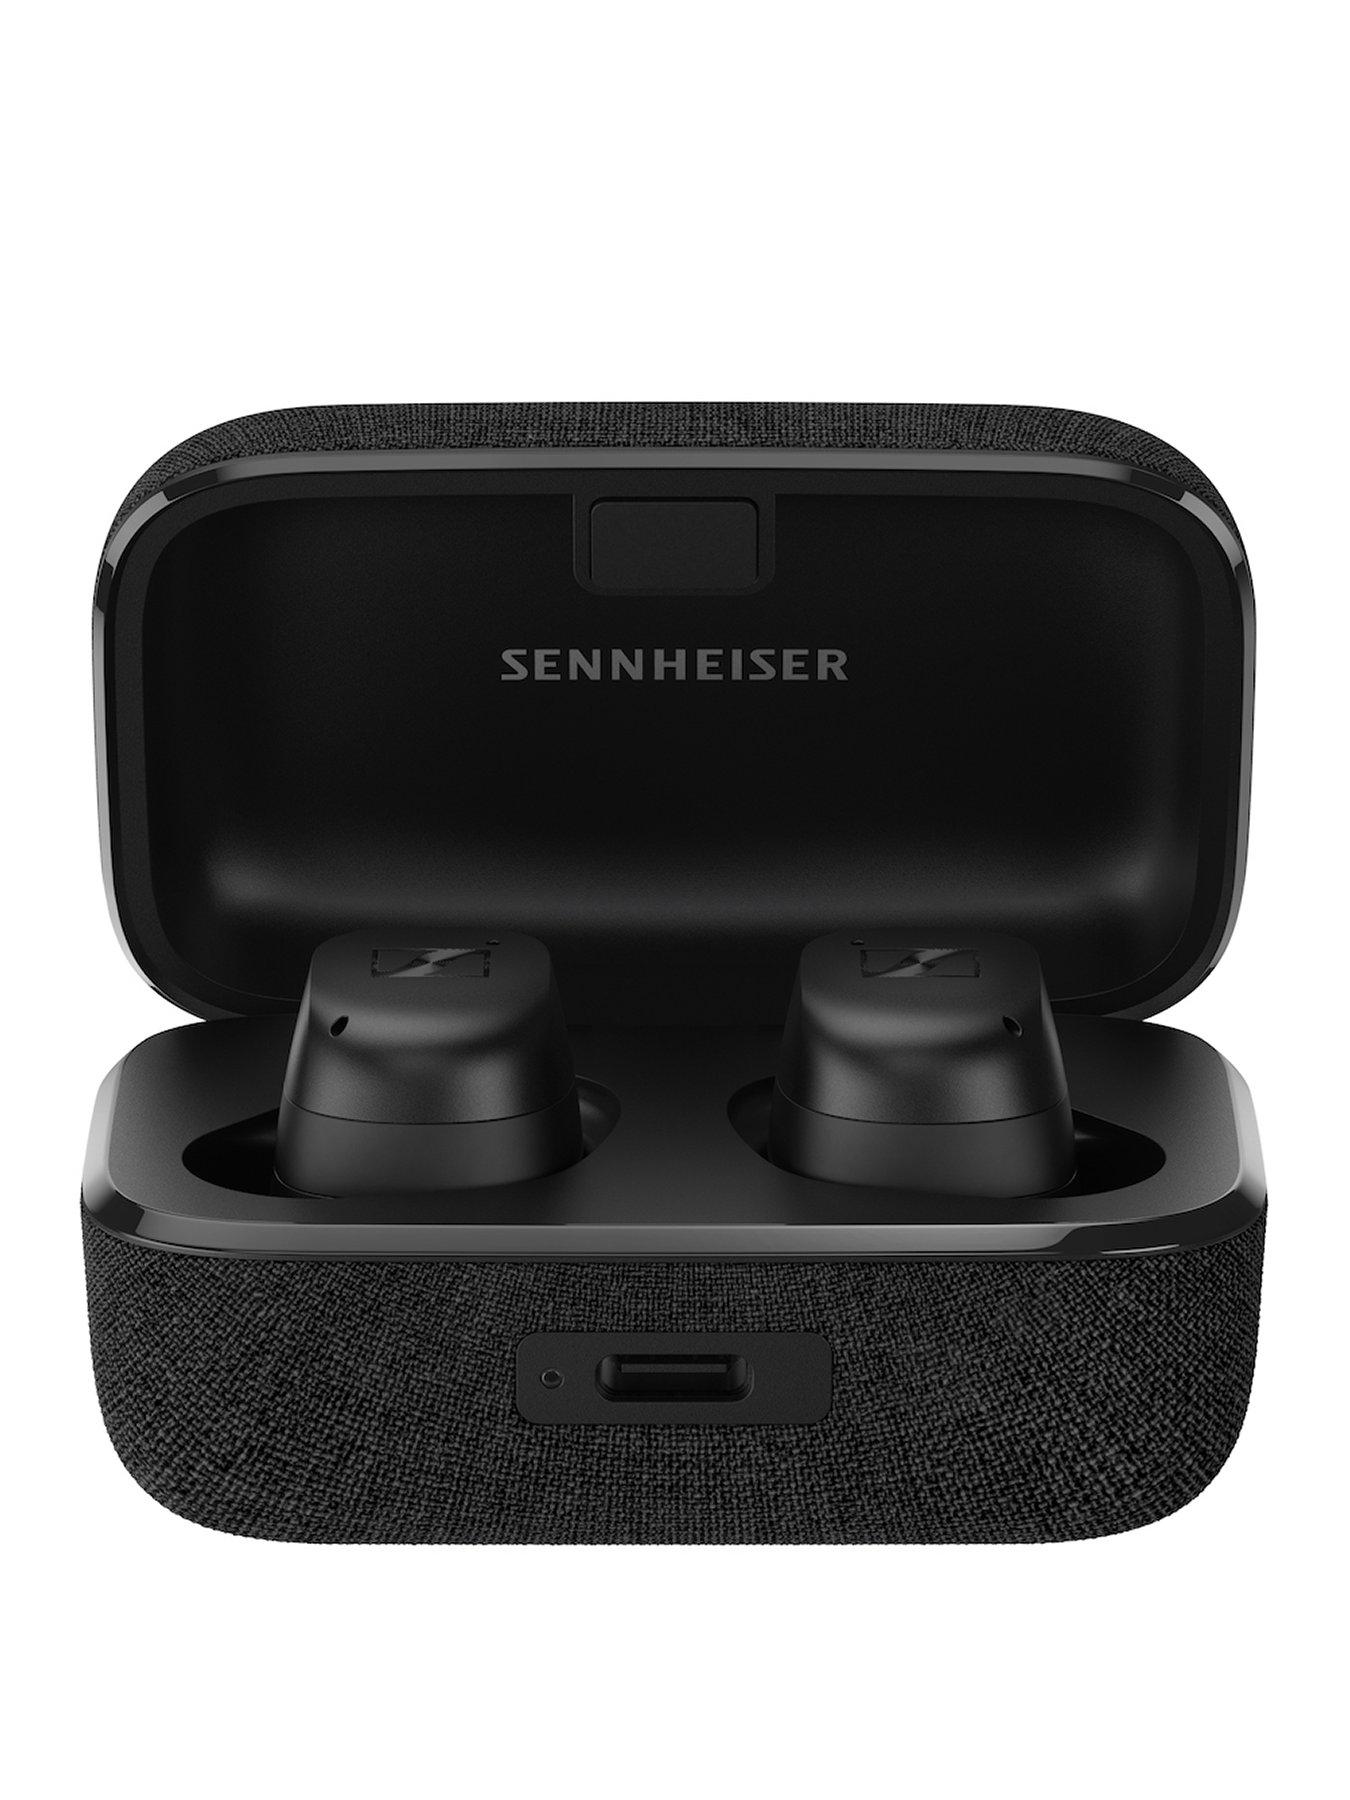 Sennheiser MOMENTUM True Wireless 3 Earbuds - Black | very.co.uk